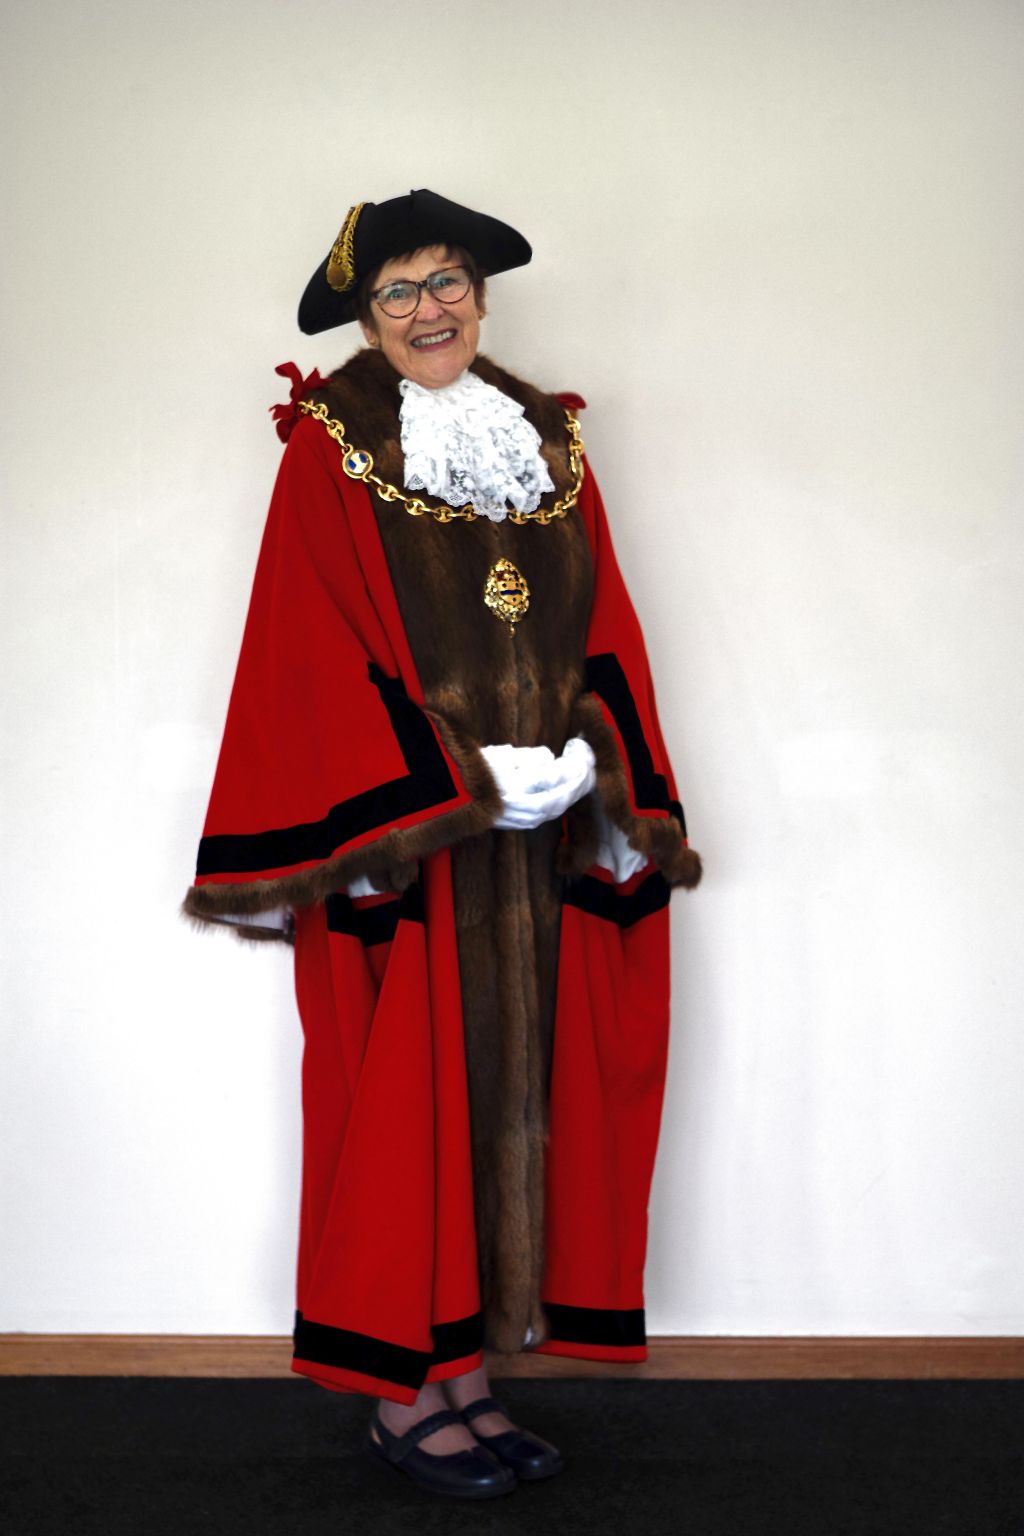 Maidstone has a new Mayor